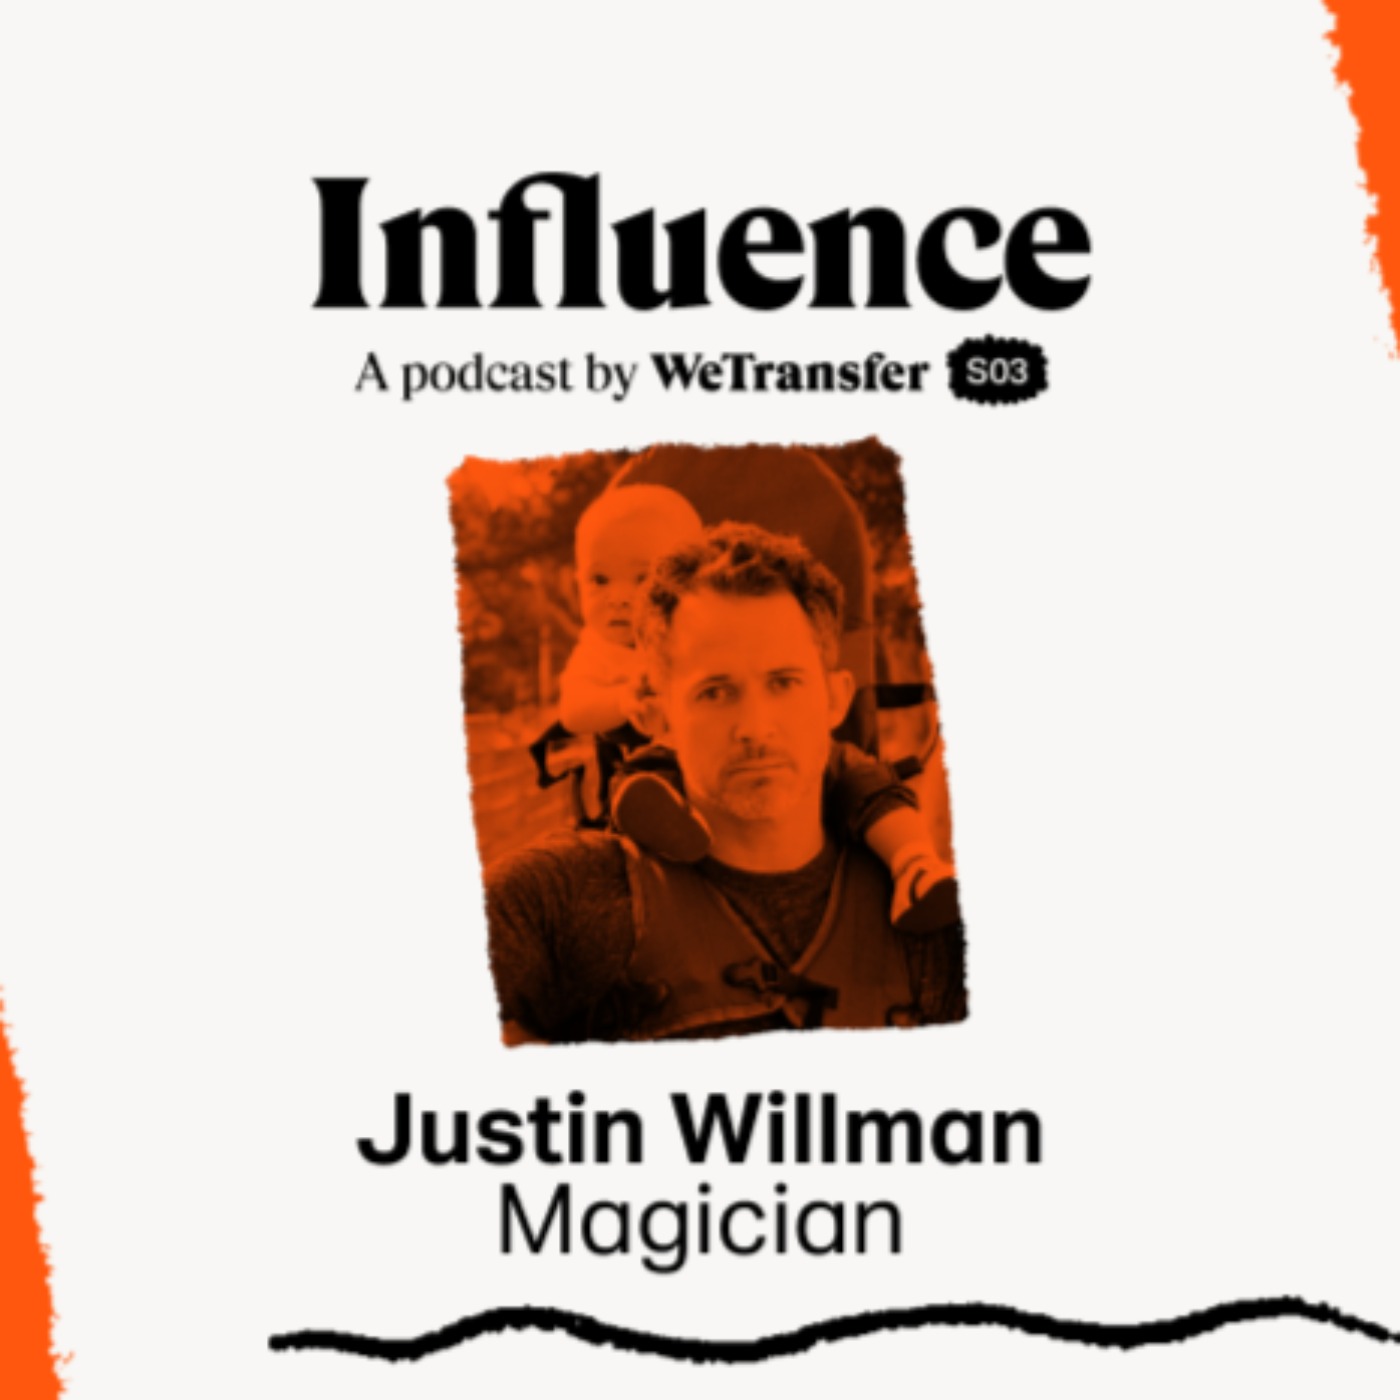 Justin Willman on Magic, Illusion, and Manipulation